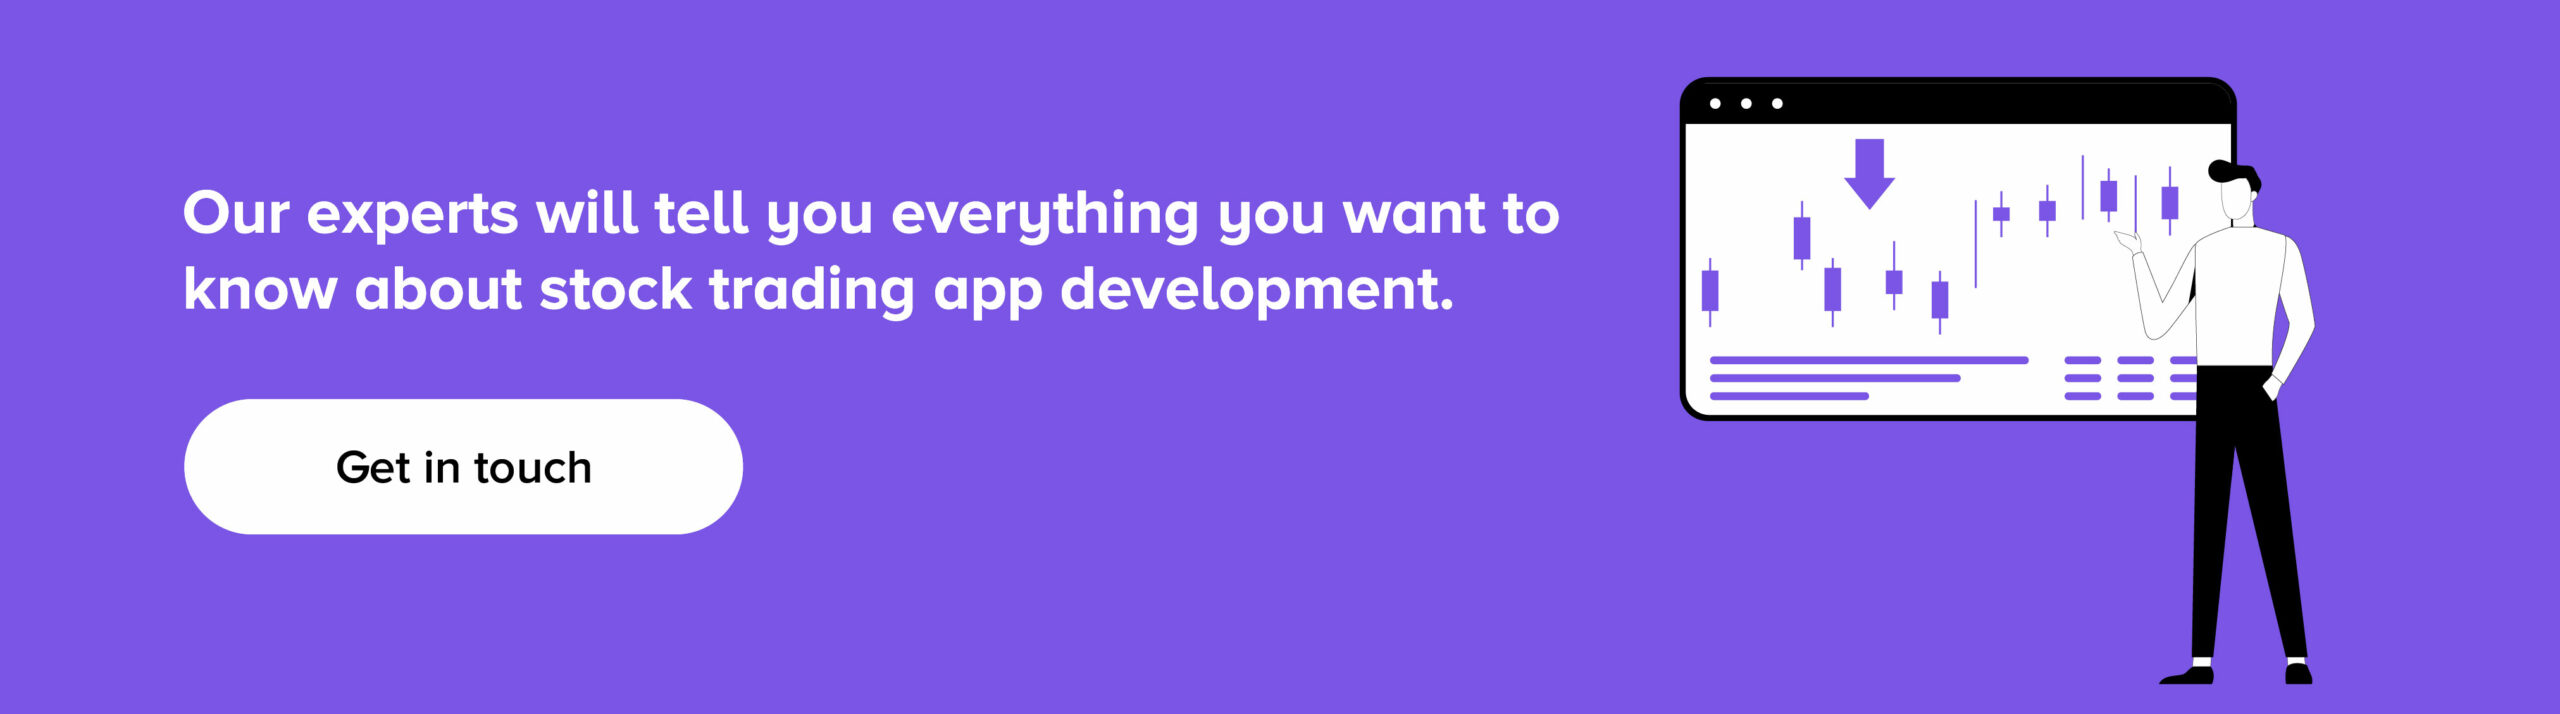 robinhood app development cta